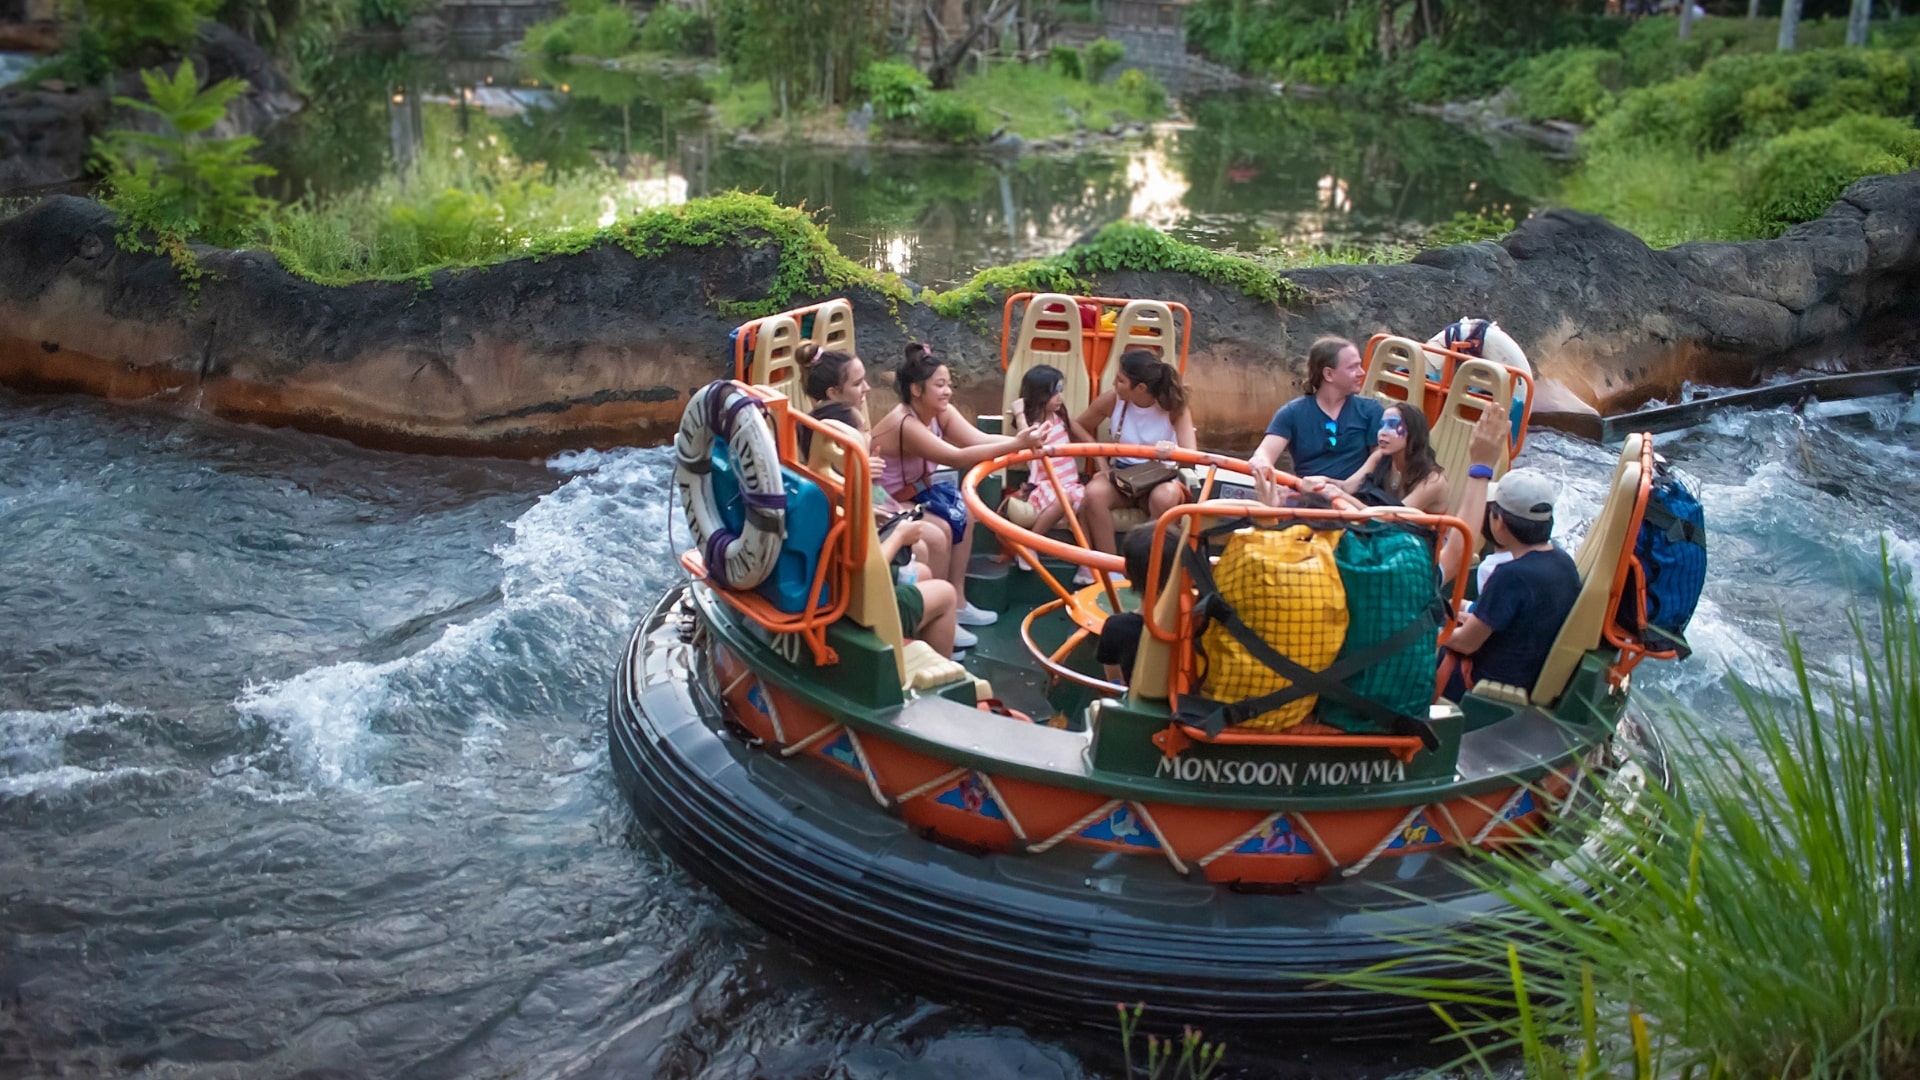 Kali River Rapids Ride at Disney World